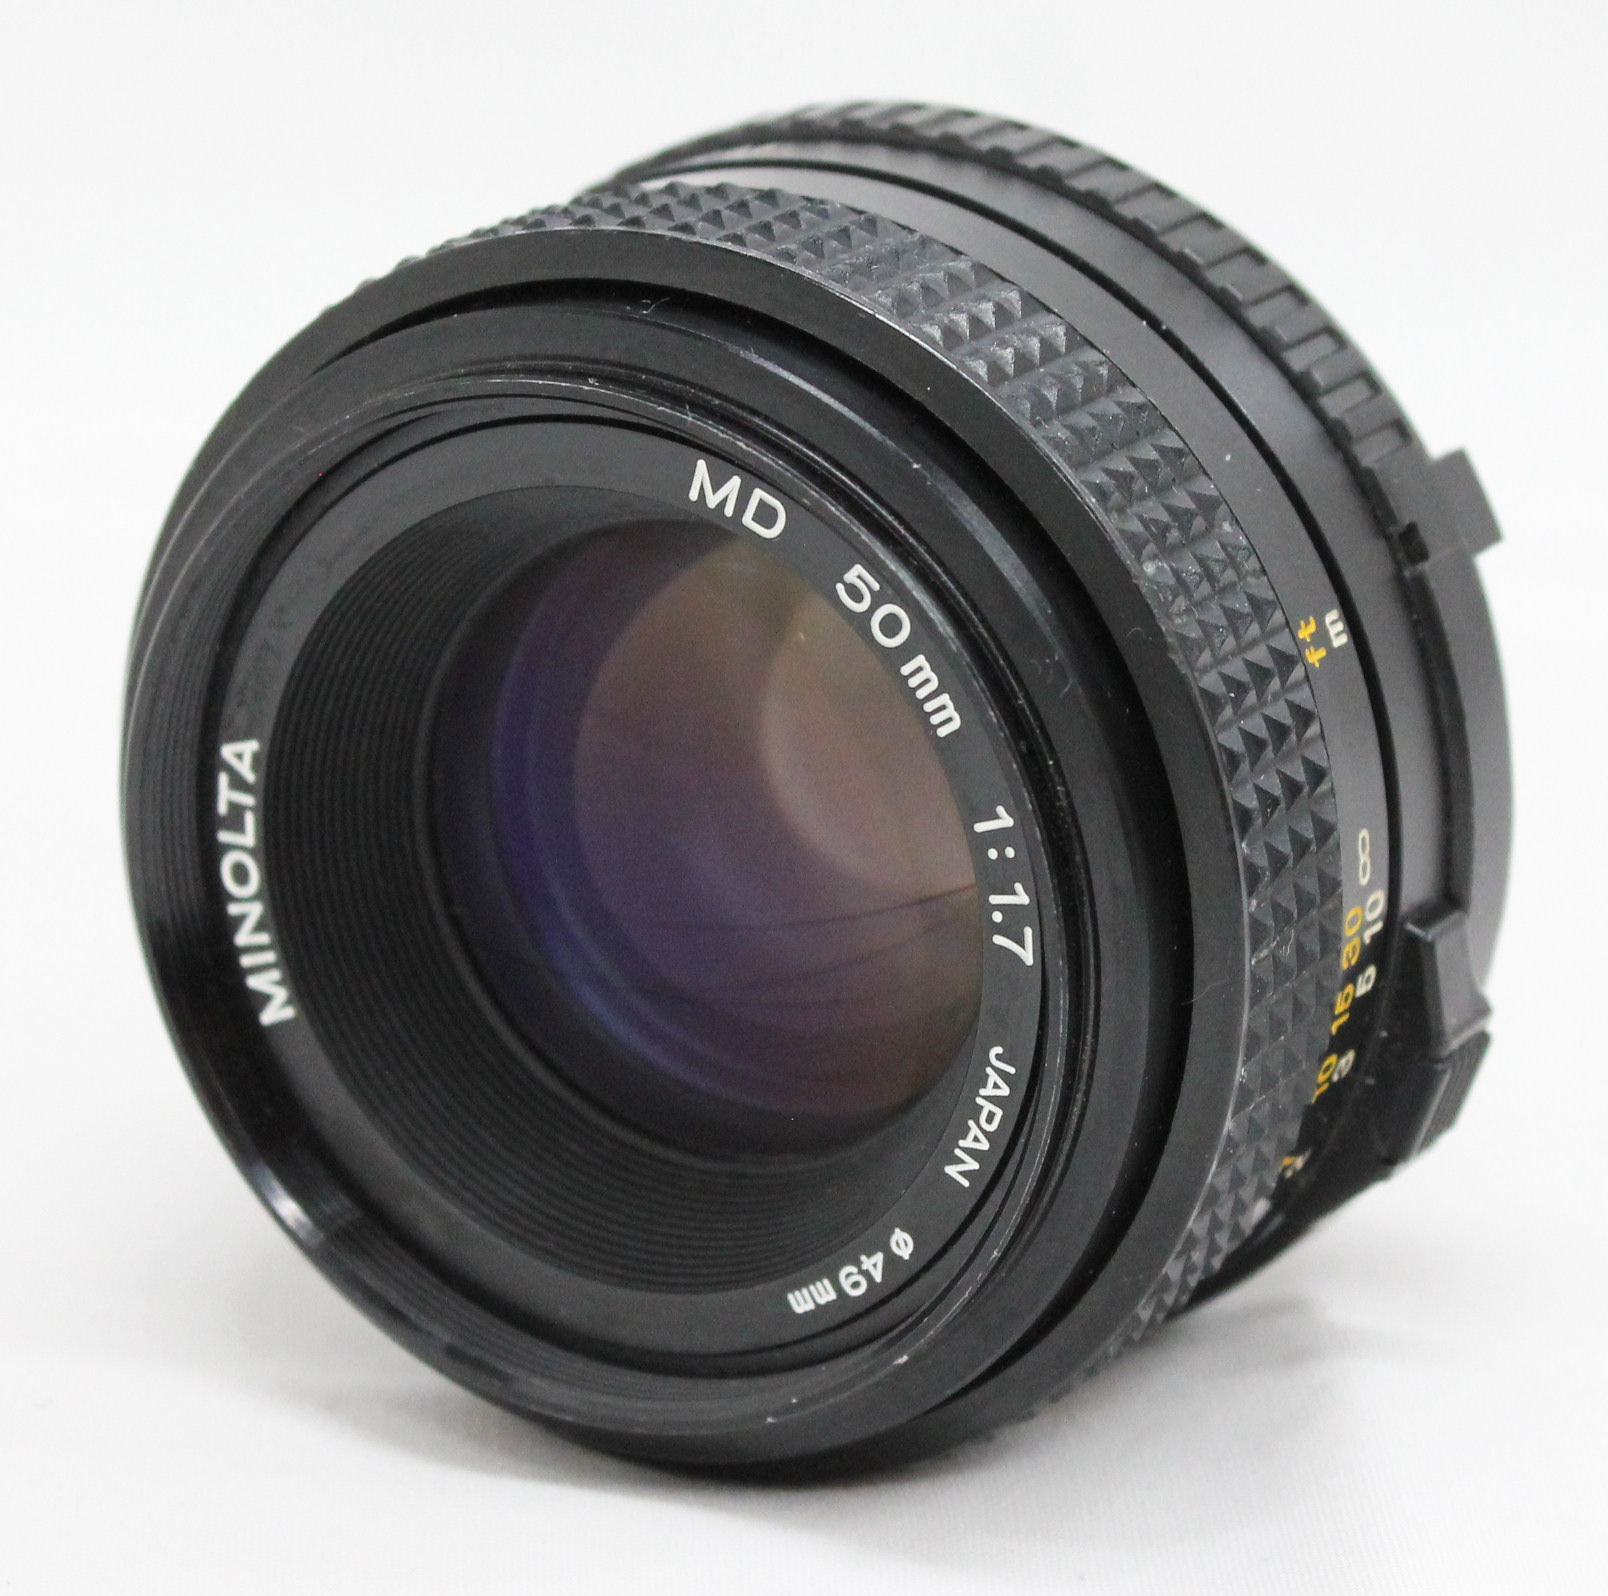 Japan Used Camera Shop | [Near Mint] Minolta MD Rokkor 50mm F/1.7 Lens from Japan